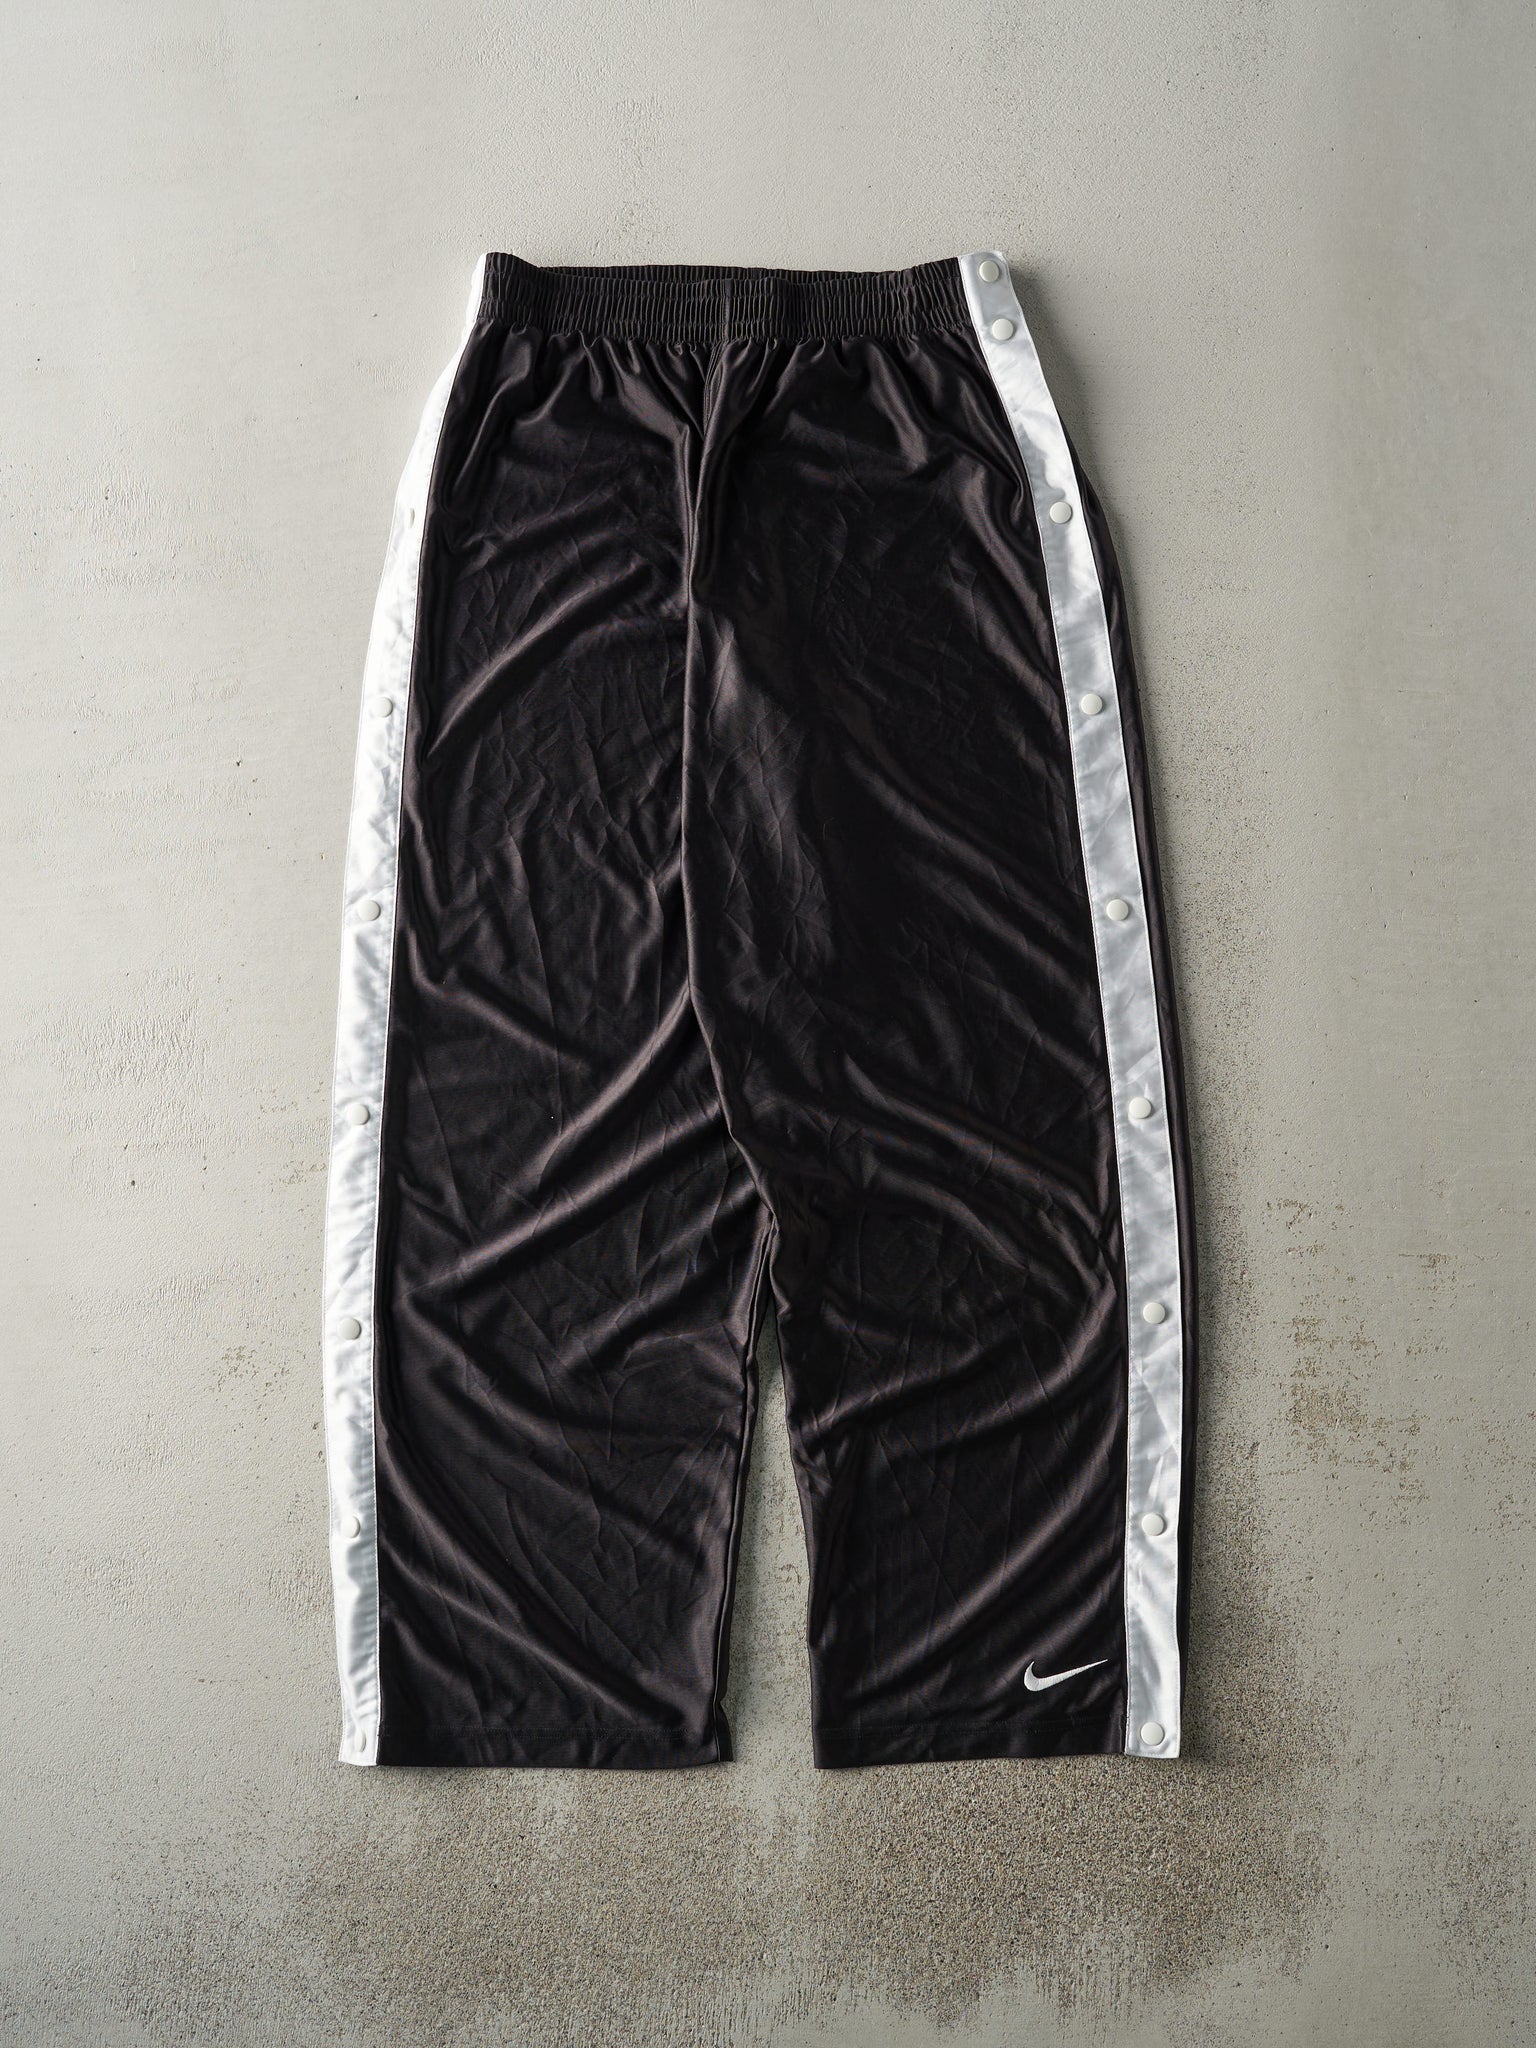 Vintage 90s Black Embroidered Nike Tear Away Track Pants (32x32.5)